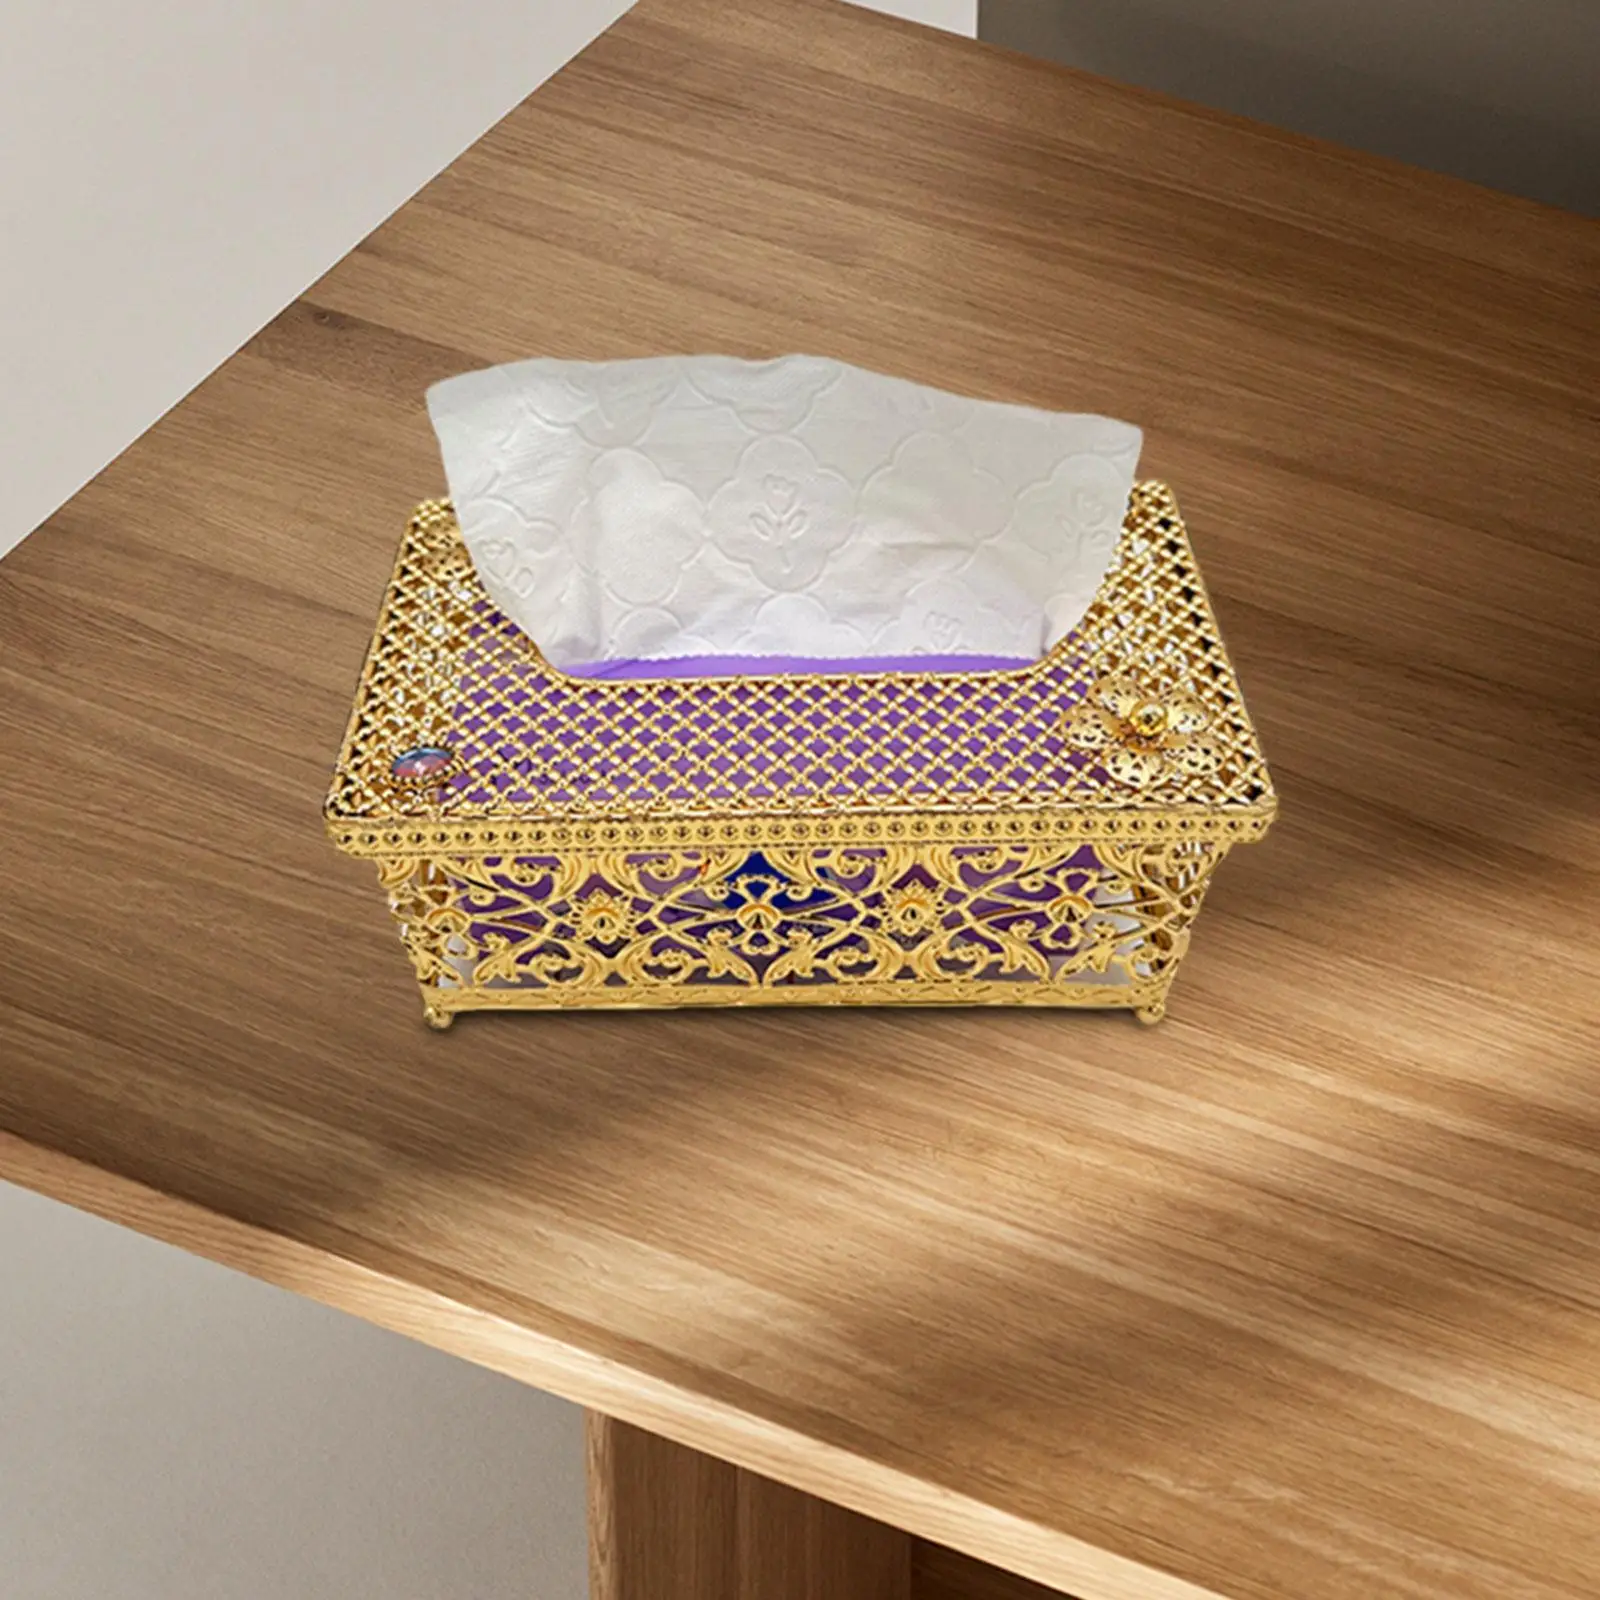 Tissue Box Cover Decorative Elegant Rectangle Napkin Dispenser Bathroom Tissue Holders for Dressers Countertop Bedroom Decor